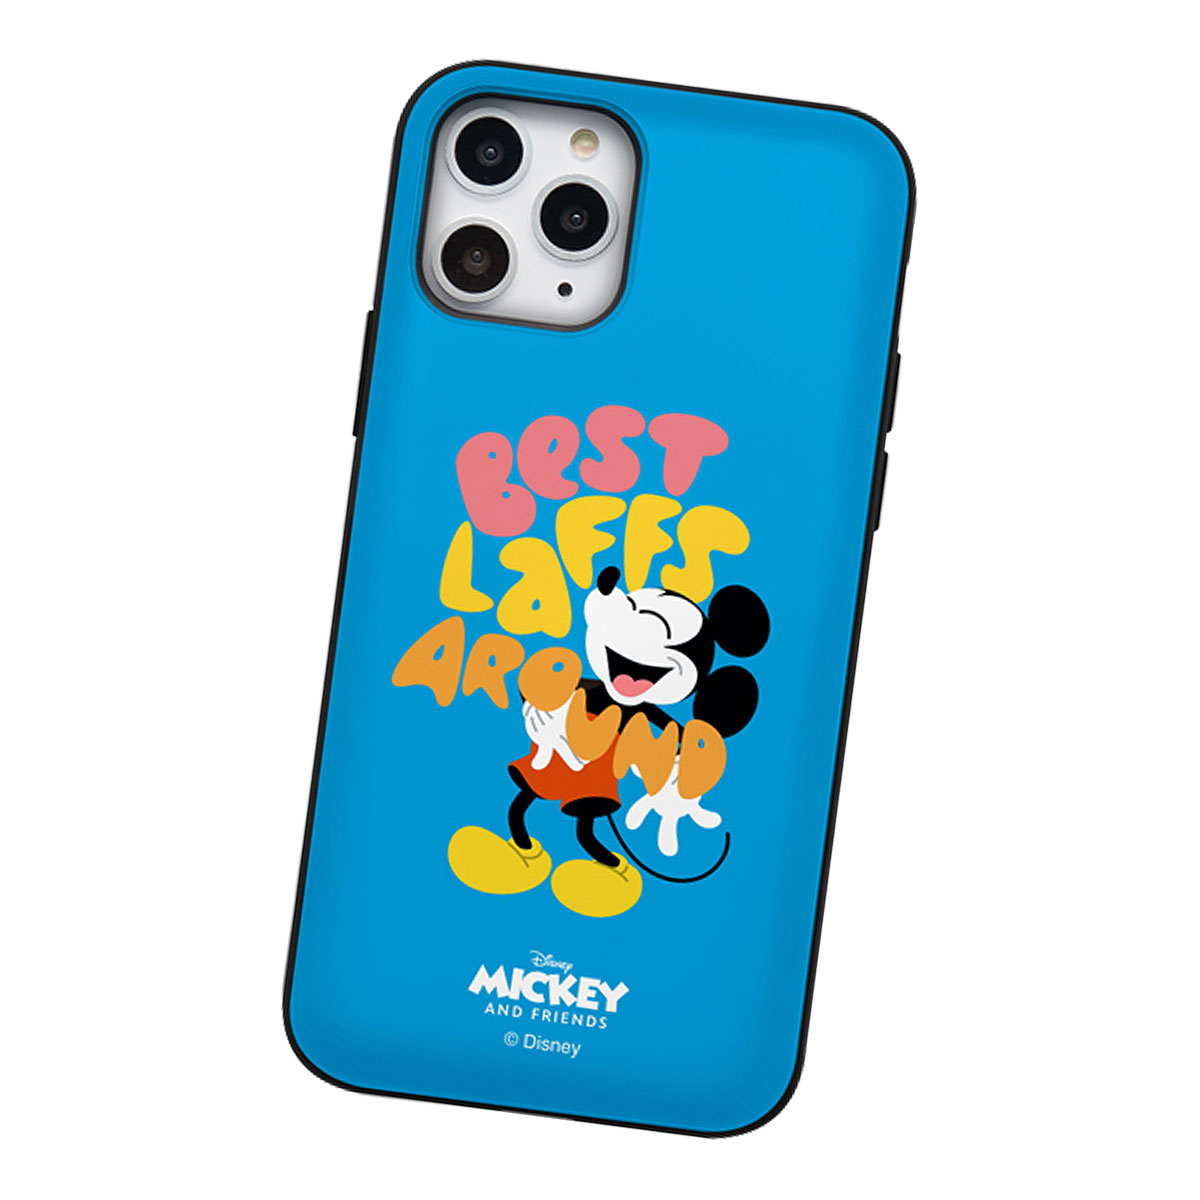 Disney iPhone用ケース（対応iPhone機種：iPhone 12 mini用）の商品